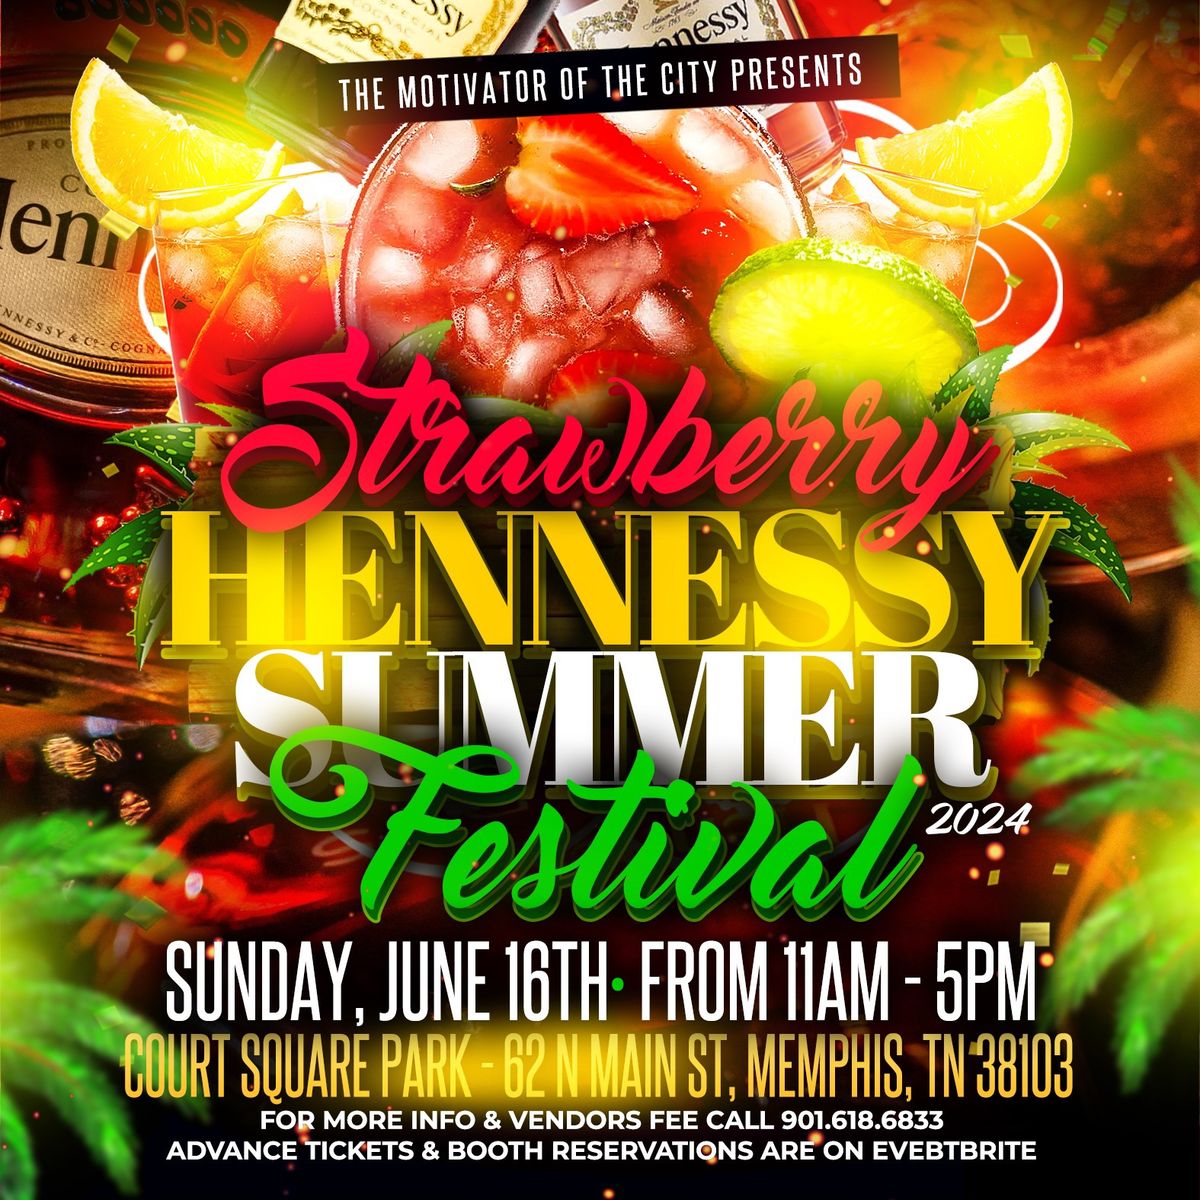 Strawberry  Hennessy Summer Festival 